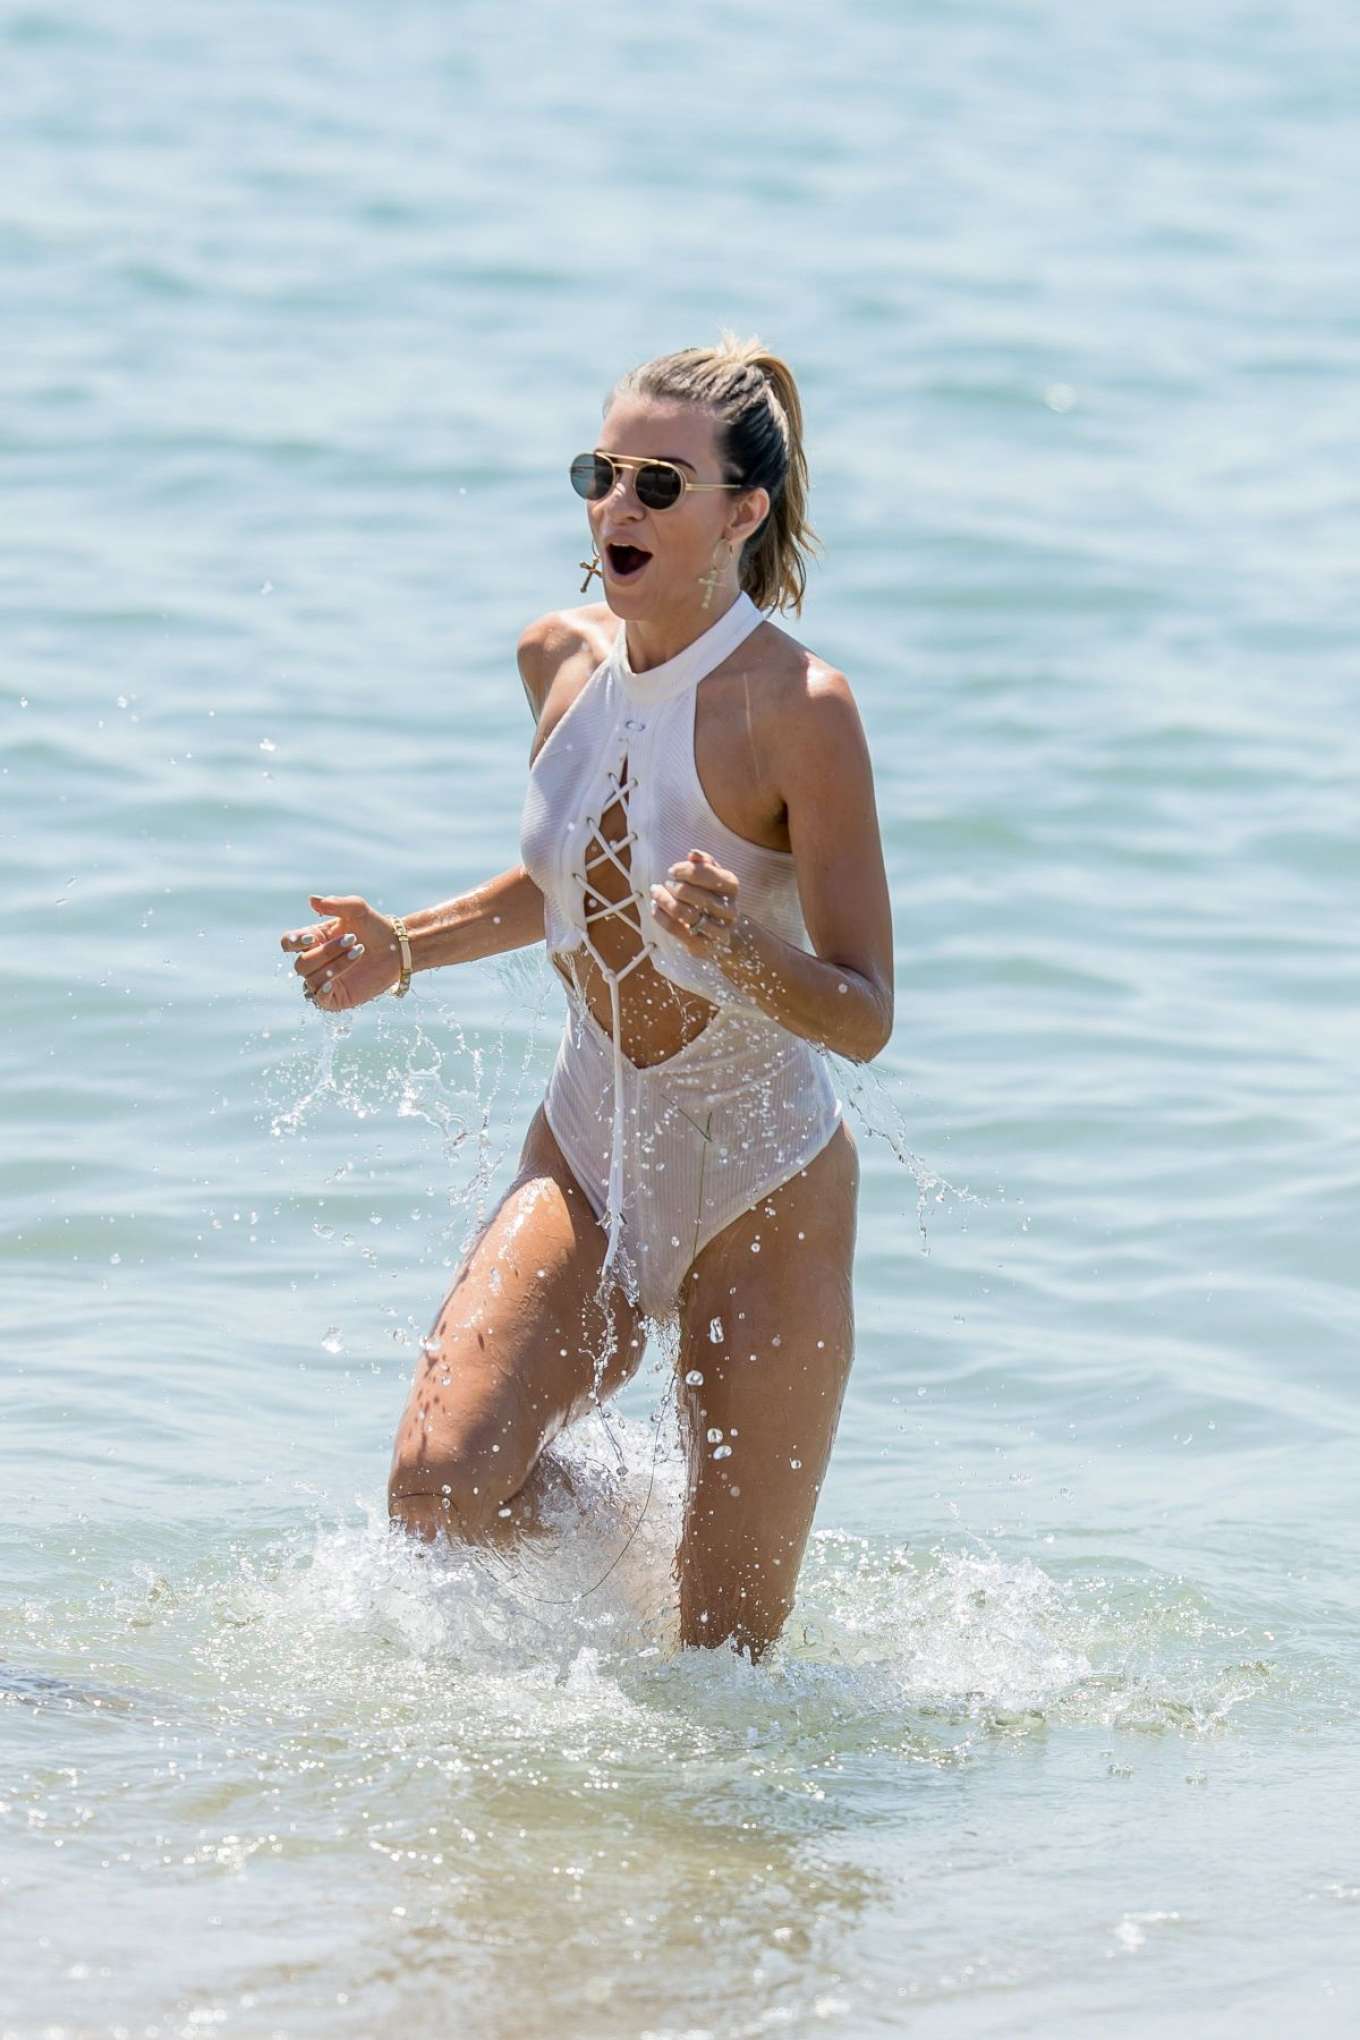 Rachel McCord in White Swimsuit at the beach in Malibu